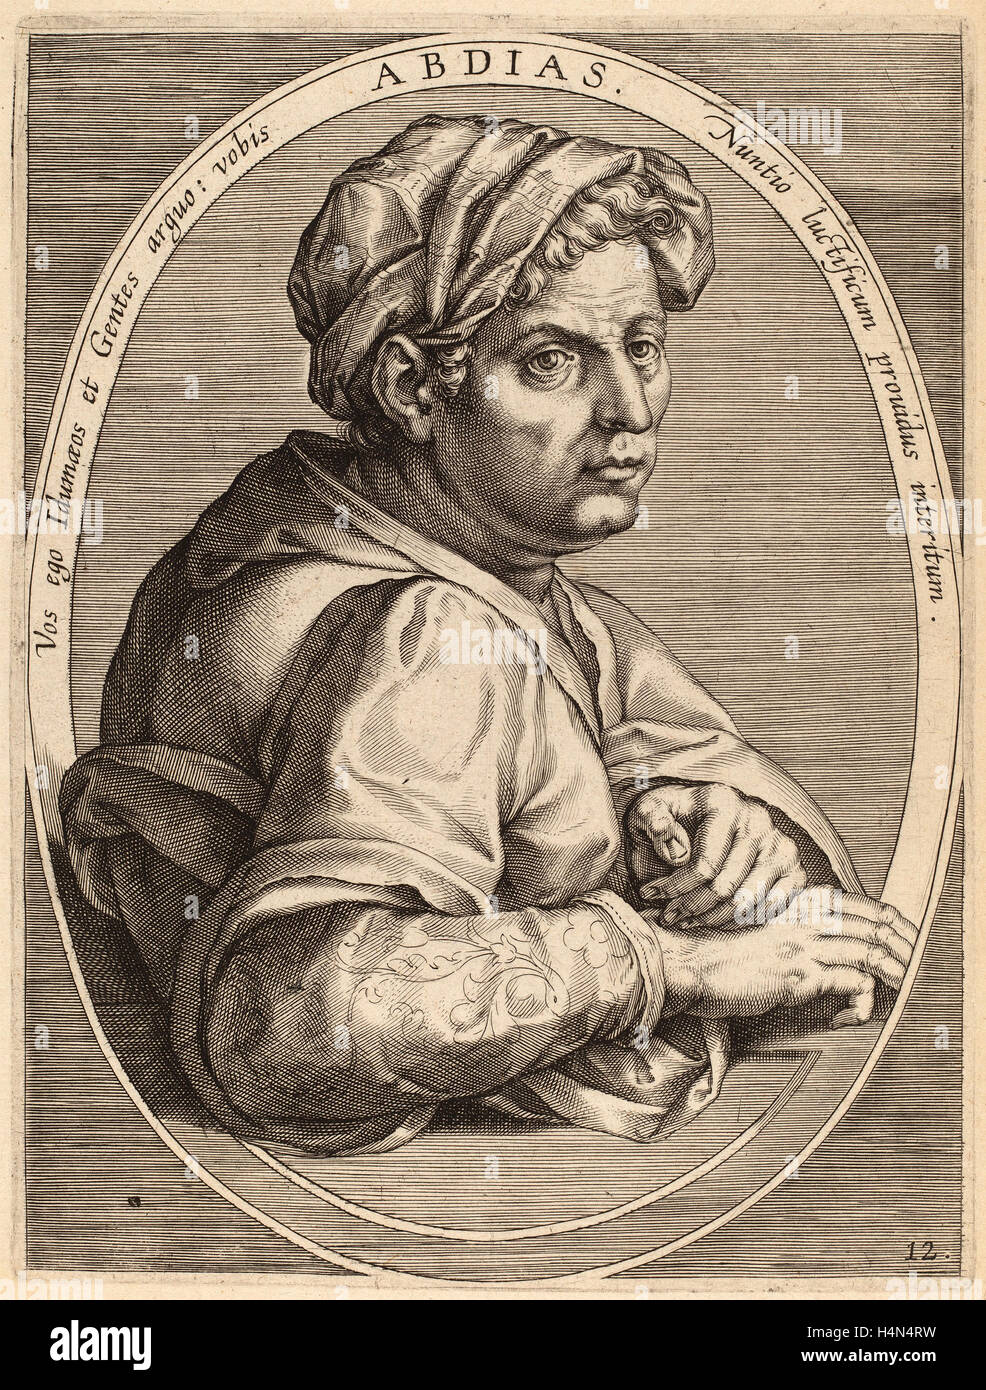 Theodor Galle after Jan van der Straet (Flemish, c. 1571 - 1633), Abdias, published 1613, engraving on laid paper Stock Photo